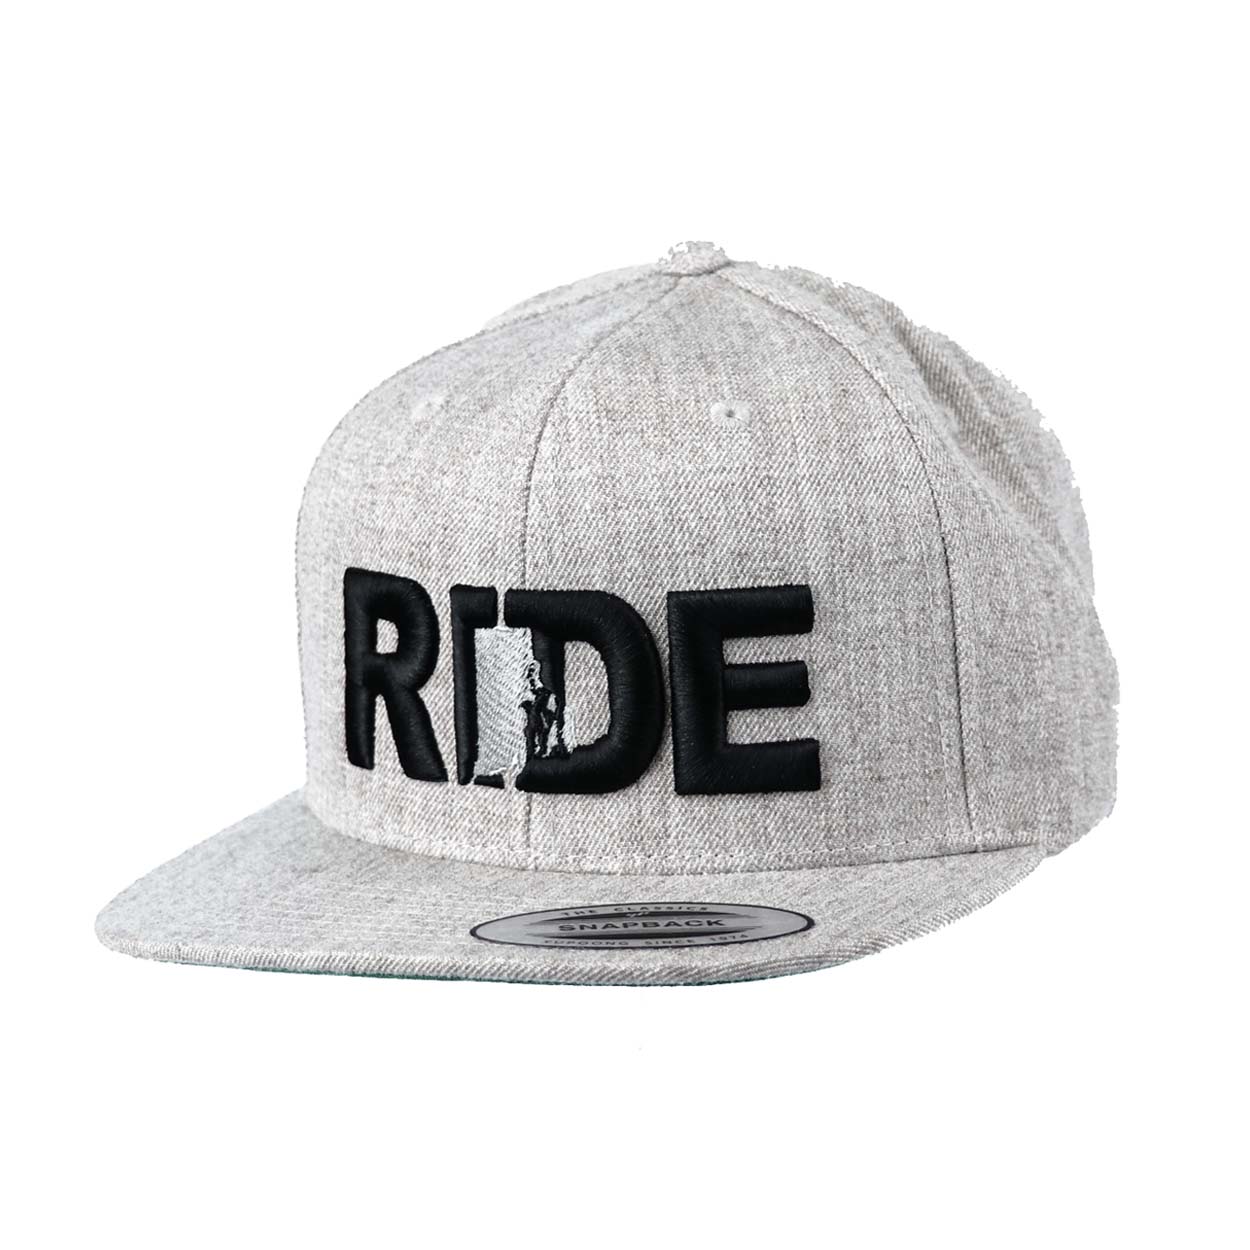 Ride Rhode Island Classic Embroidered Snapback Flat Brim Hat Heather Gray